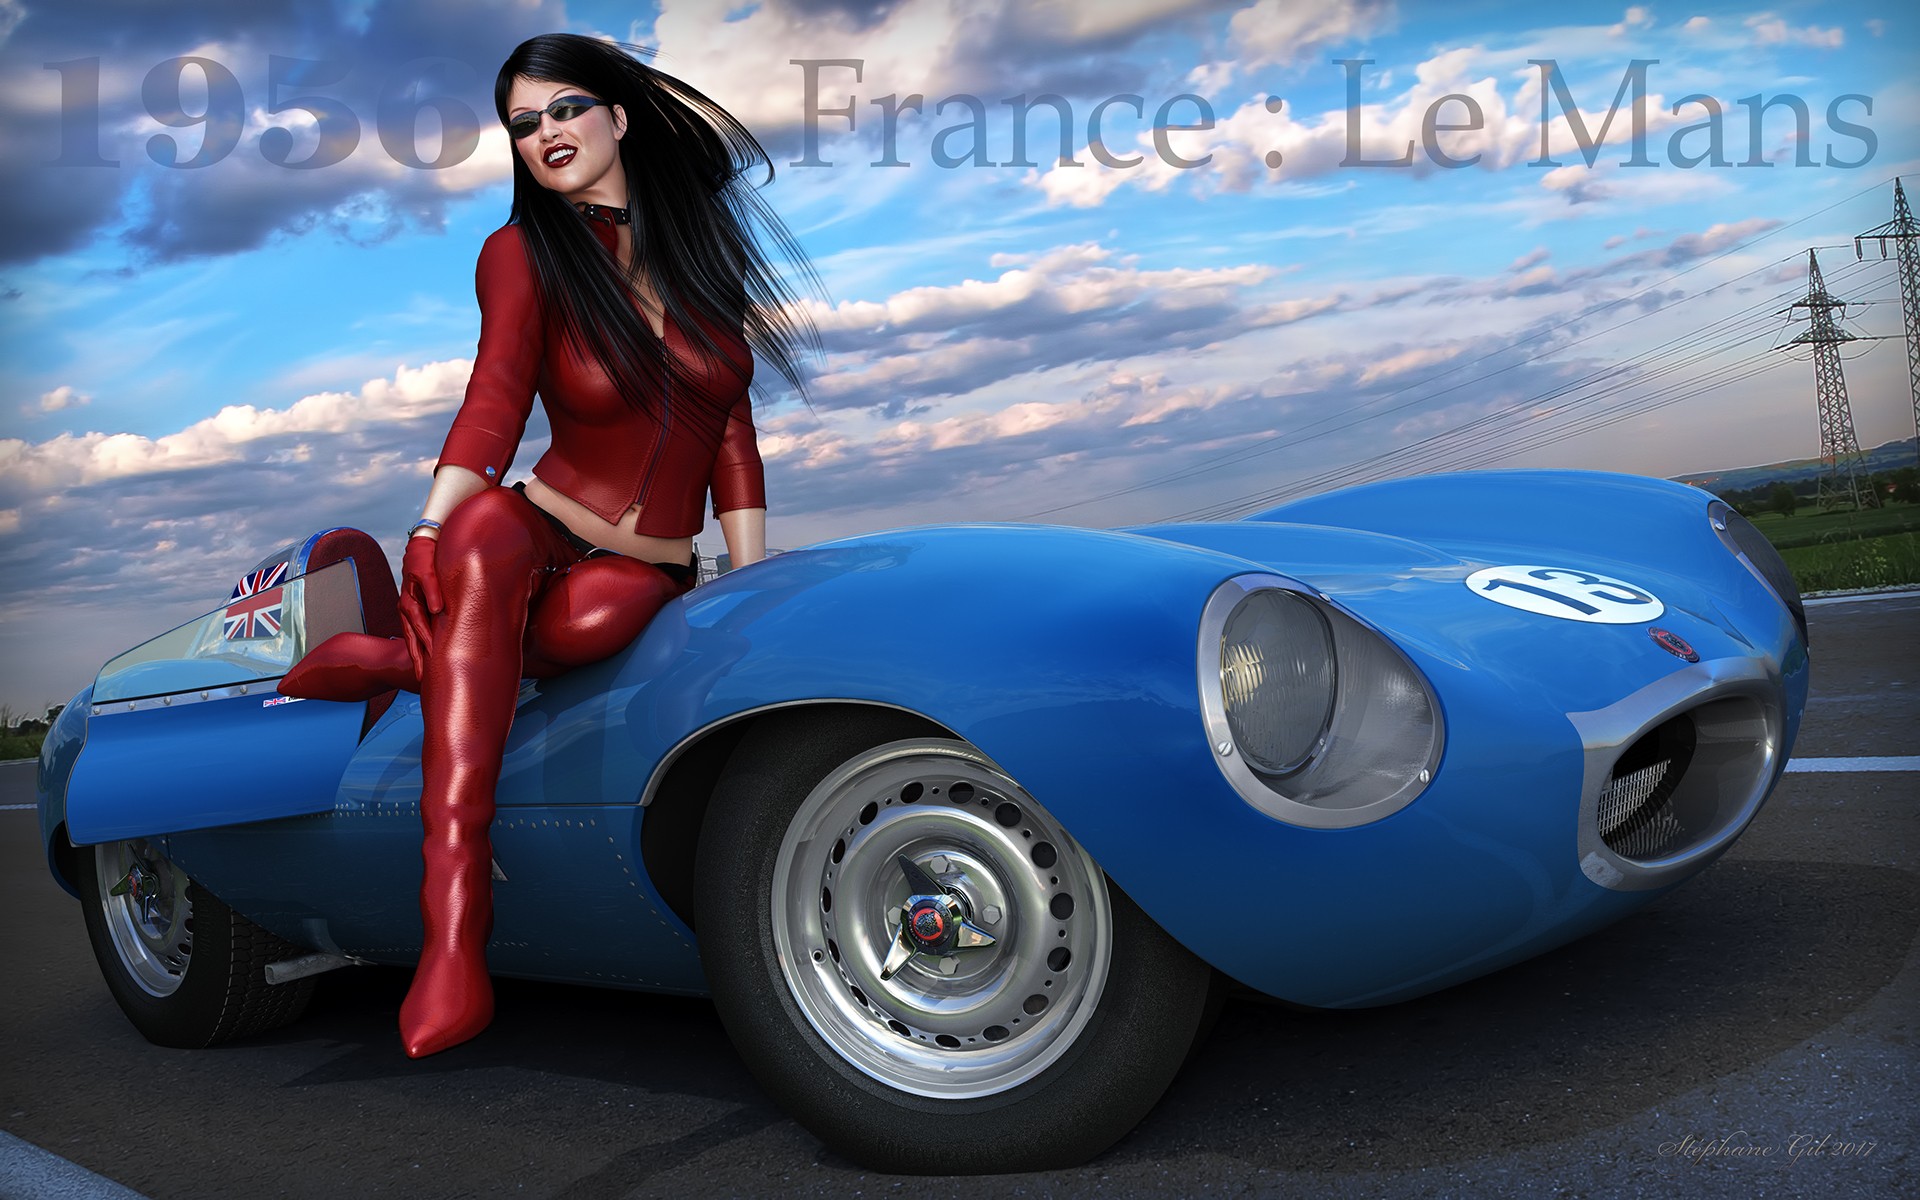 1956 France Le Mans-internet par angelesteban